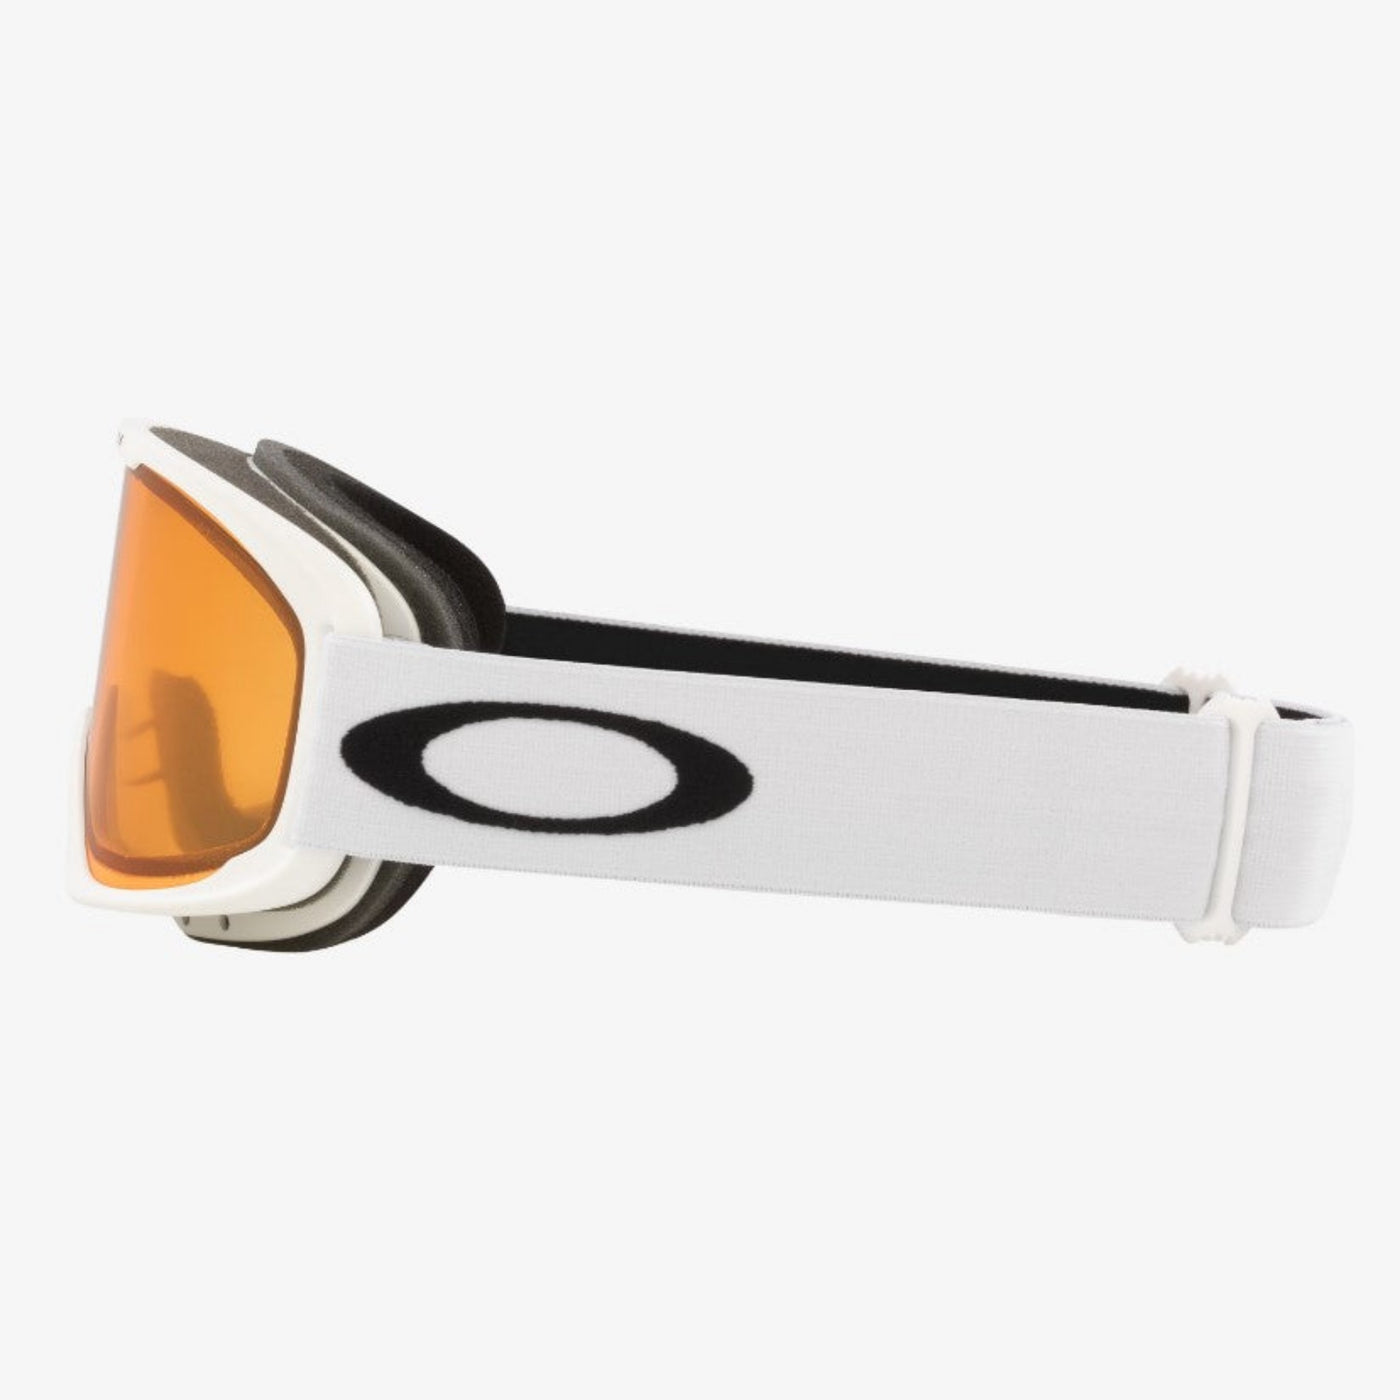 Oakley O-Frame 2.0 Pro - White, Permission Lens (Medium)